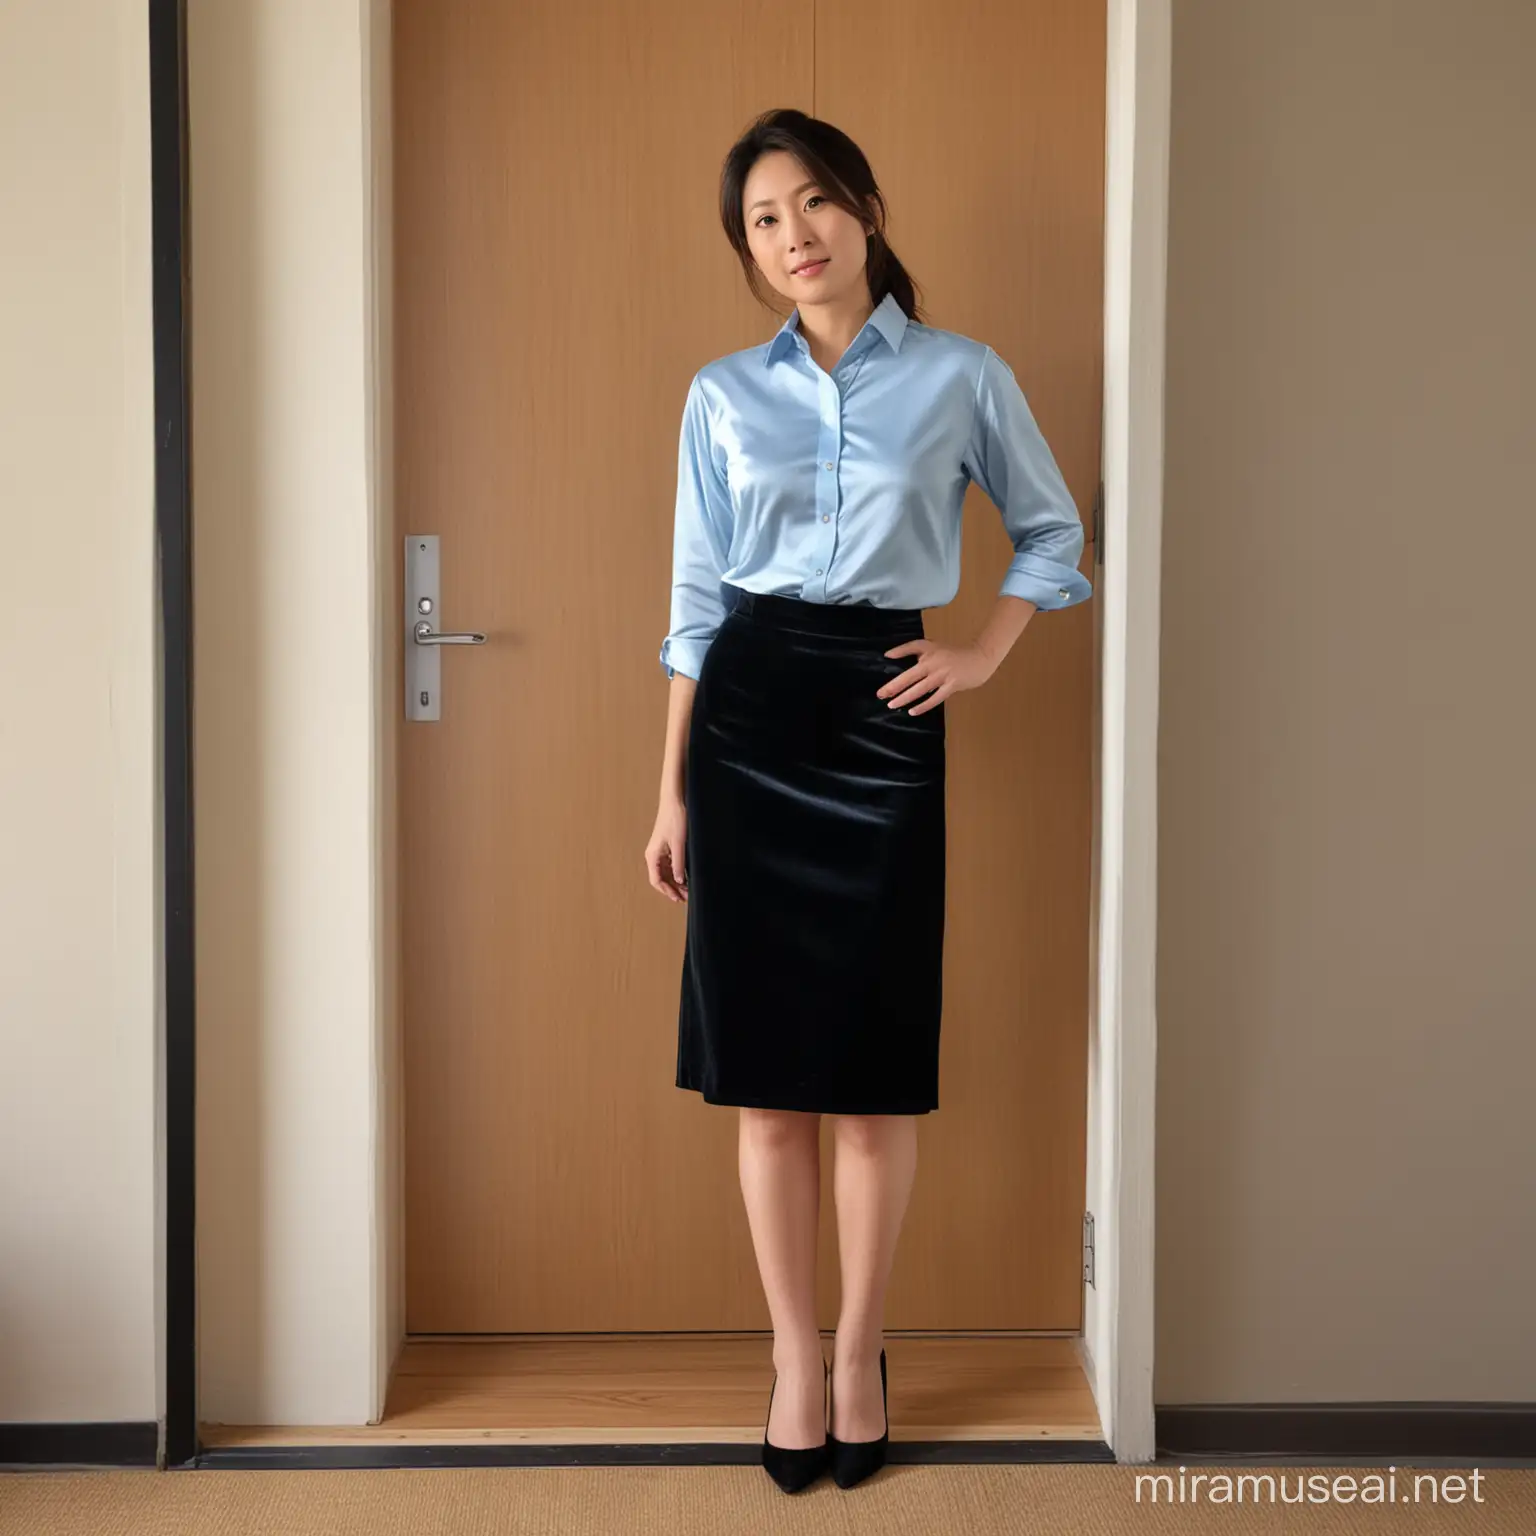 Japanese Woman in Elegant Attire Standing at Doorway